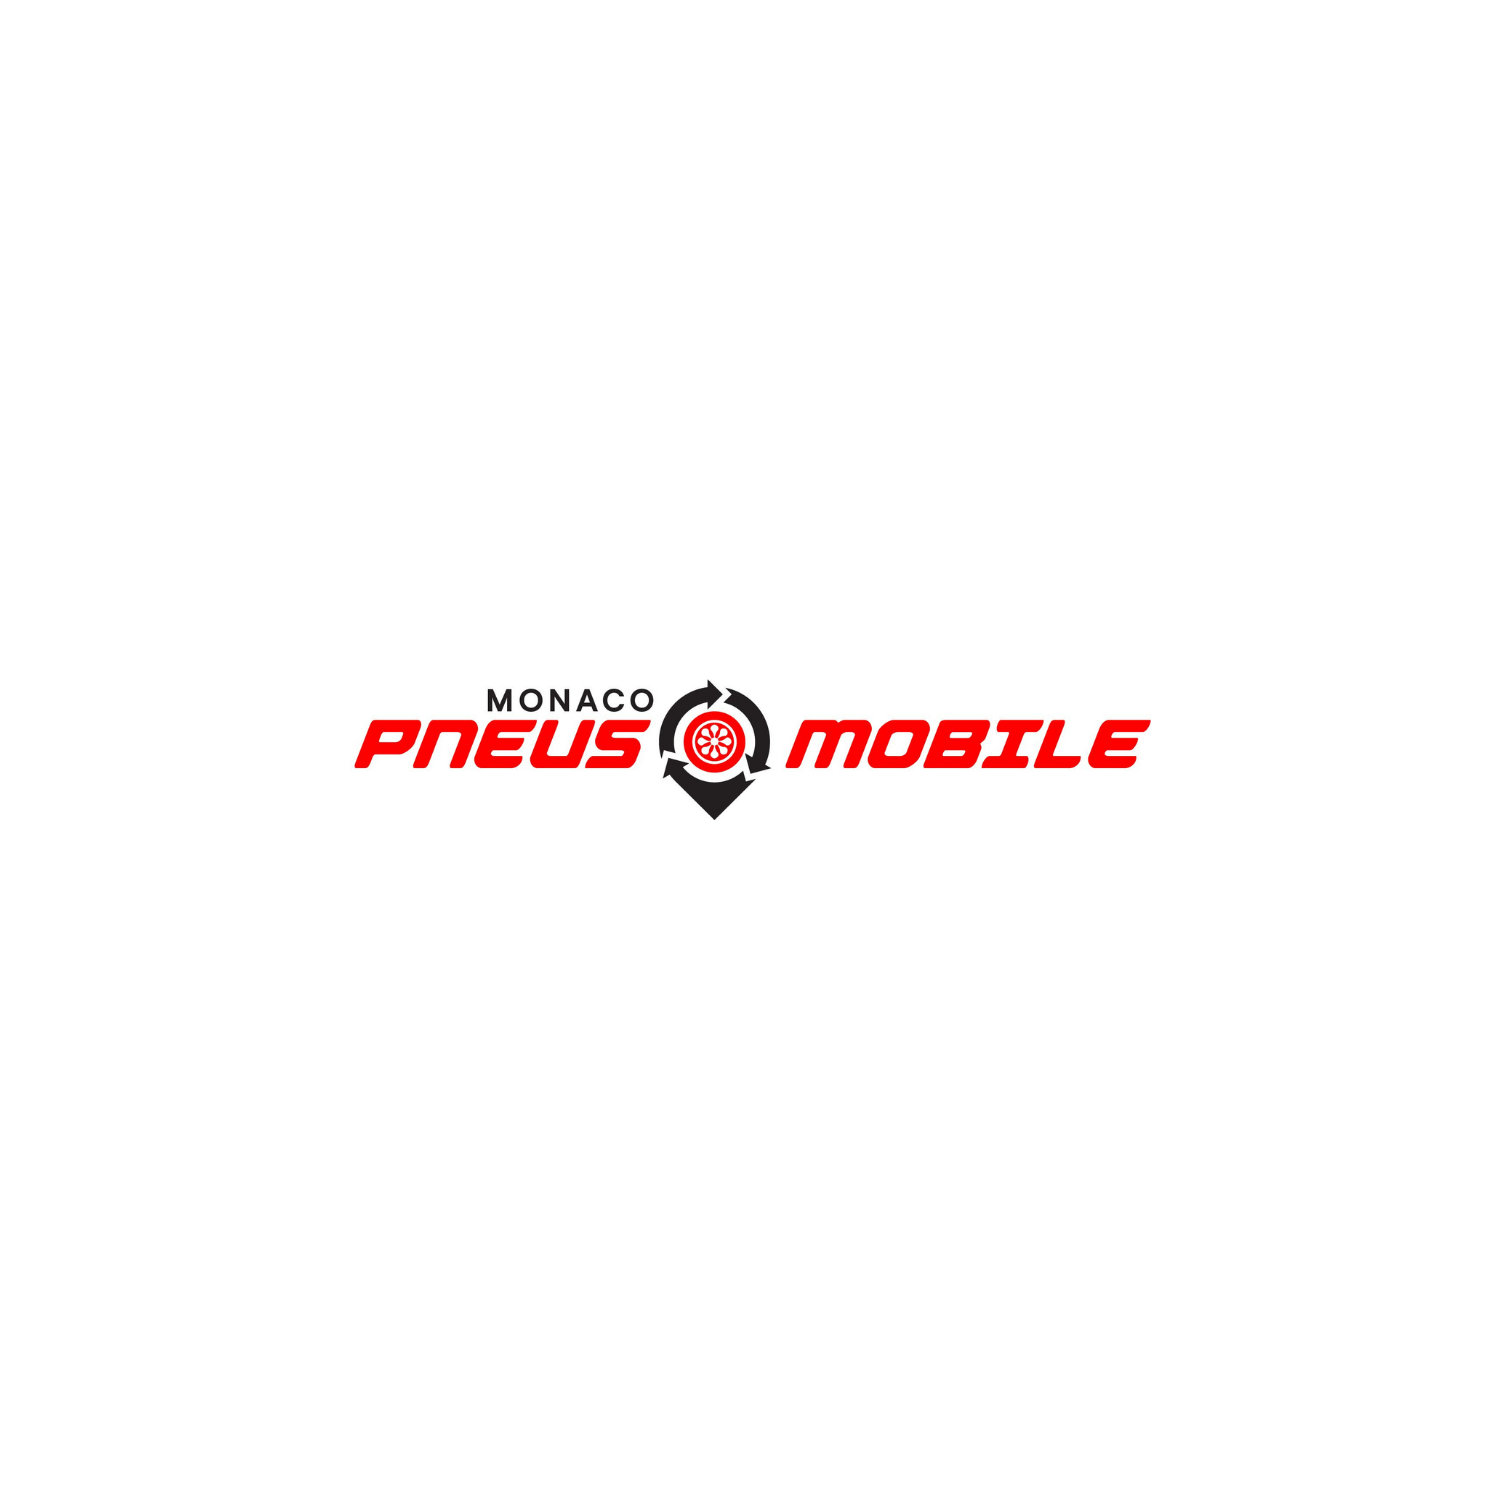 monaco-pneus-mobiles-merchant-carlo-app-service